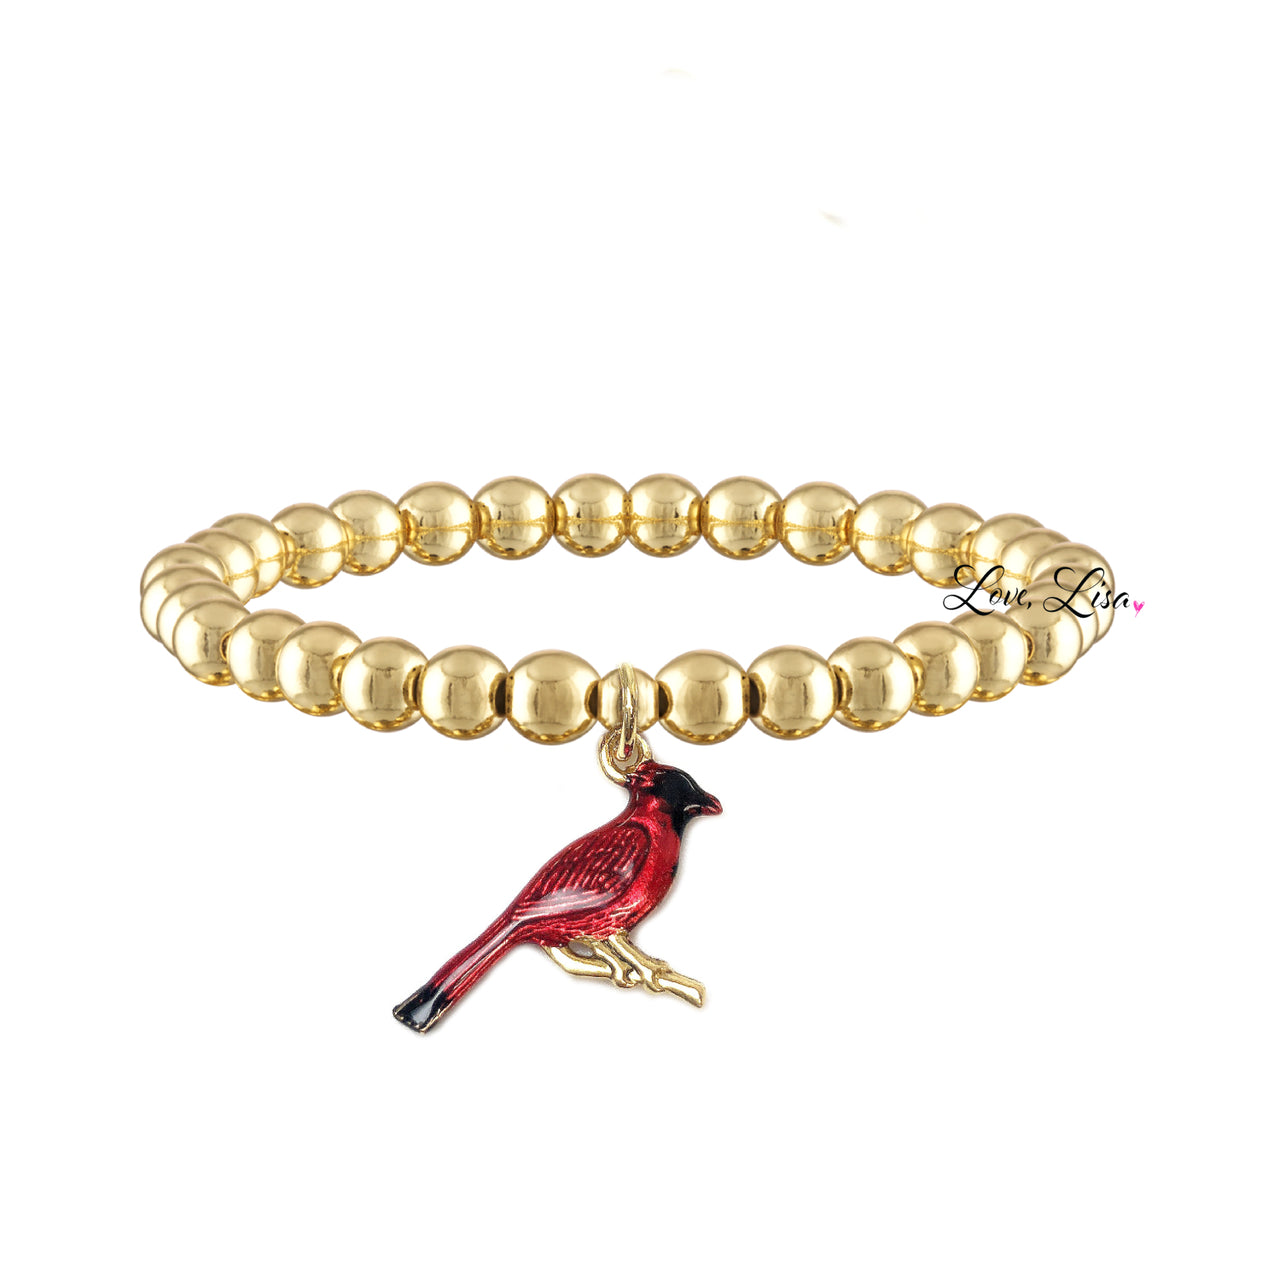 Cardinal Beaded Bracelet